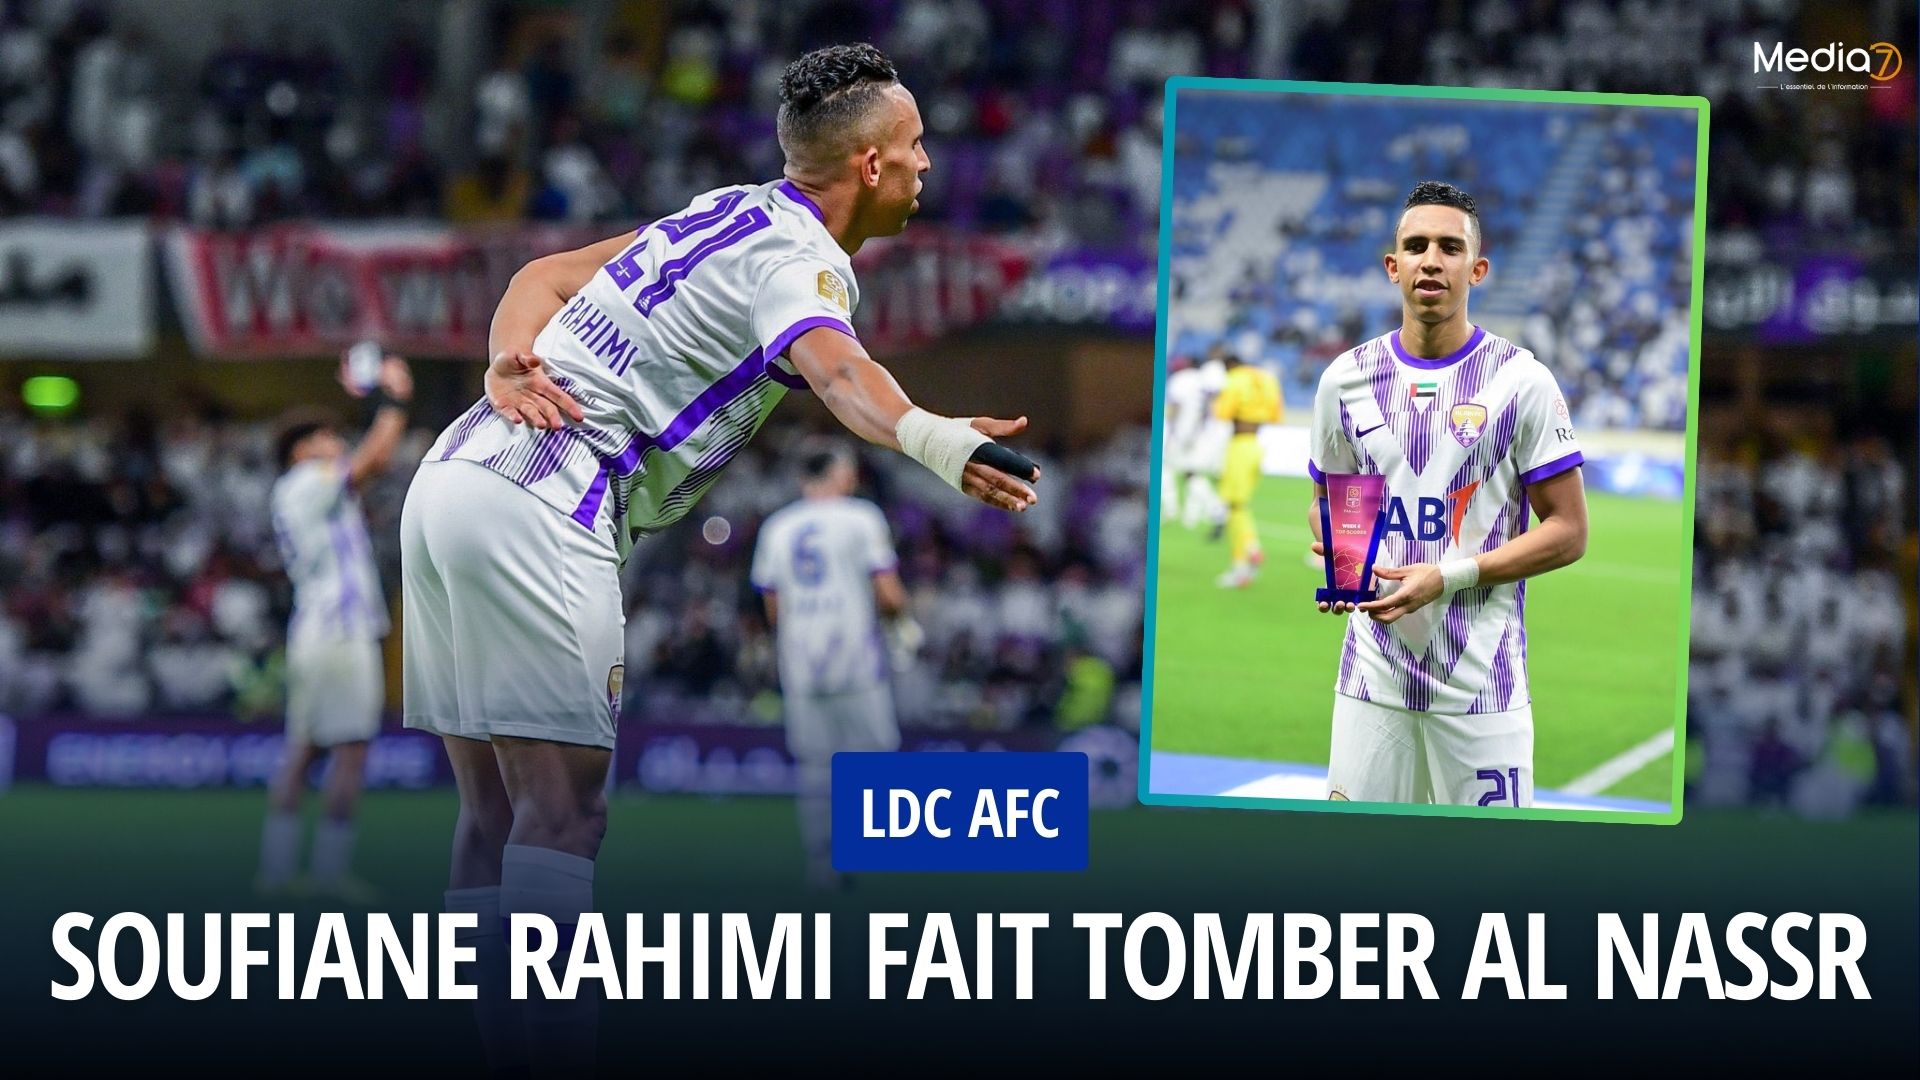 LdC AFC: Soufiane Rahimi brings down Al Nassr - Media7